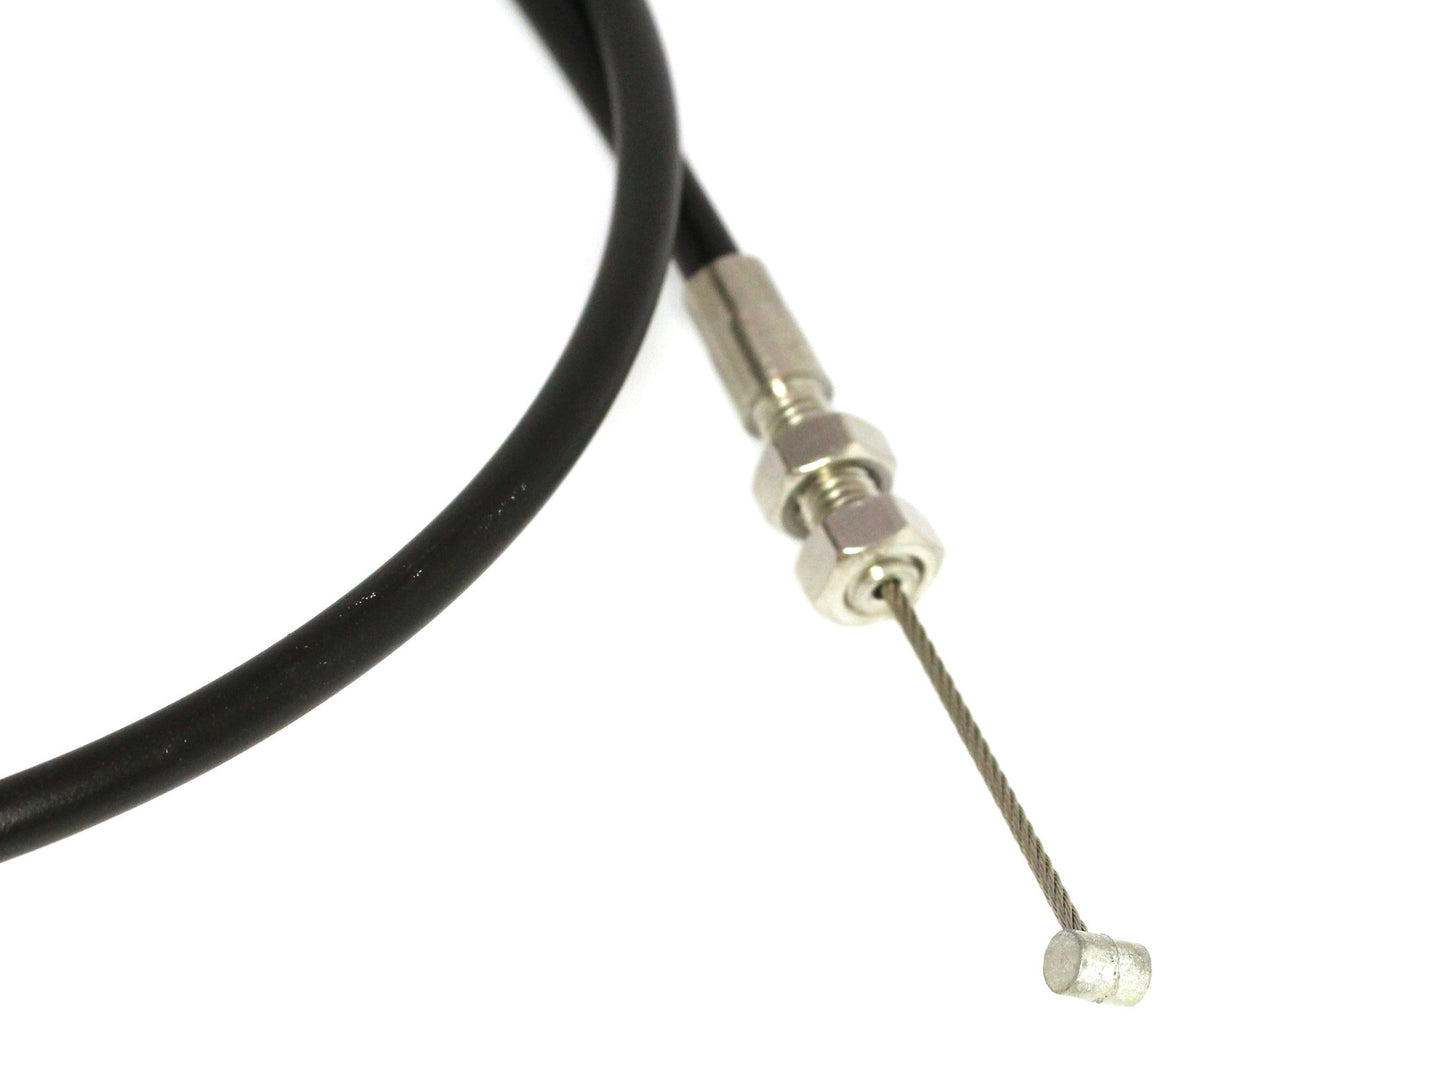 Aftermarket Trim Cable JSP Brand YC-37 Replacement for Yamaha GP7-U153D-00-00 GP 760 800 1200 Waverunner Jetski